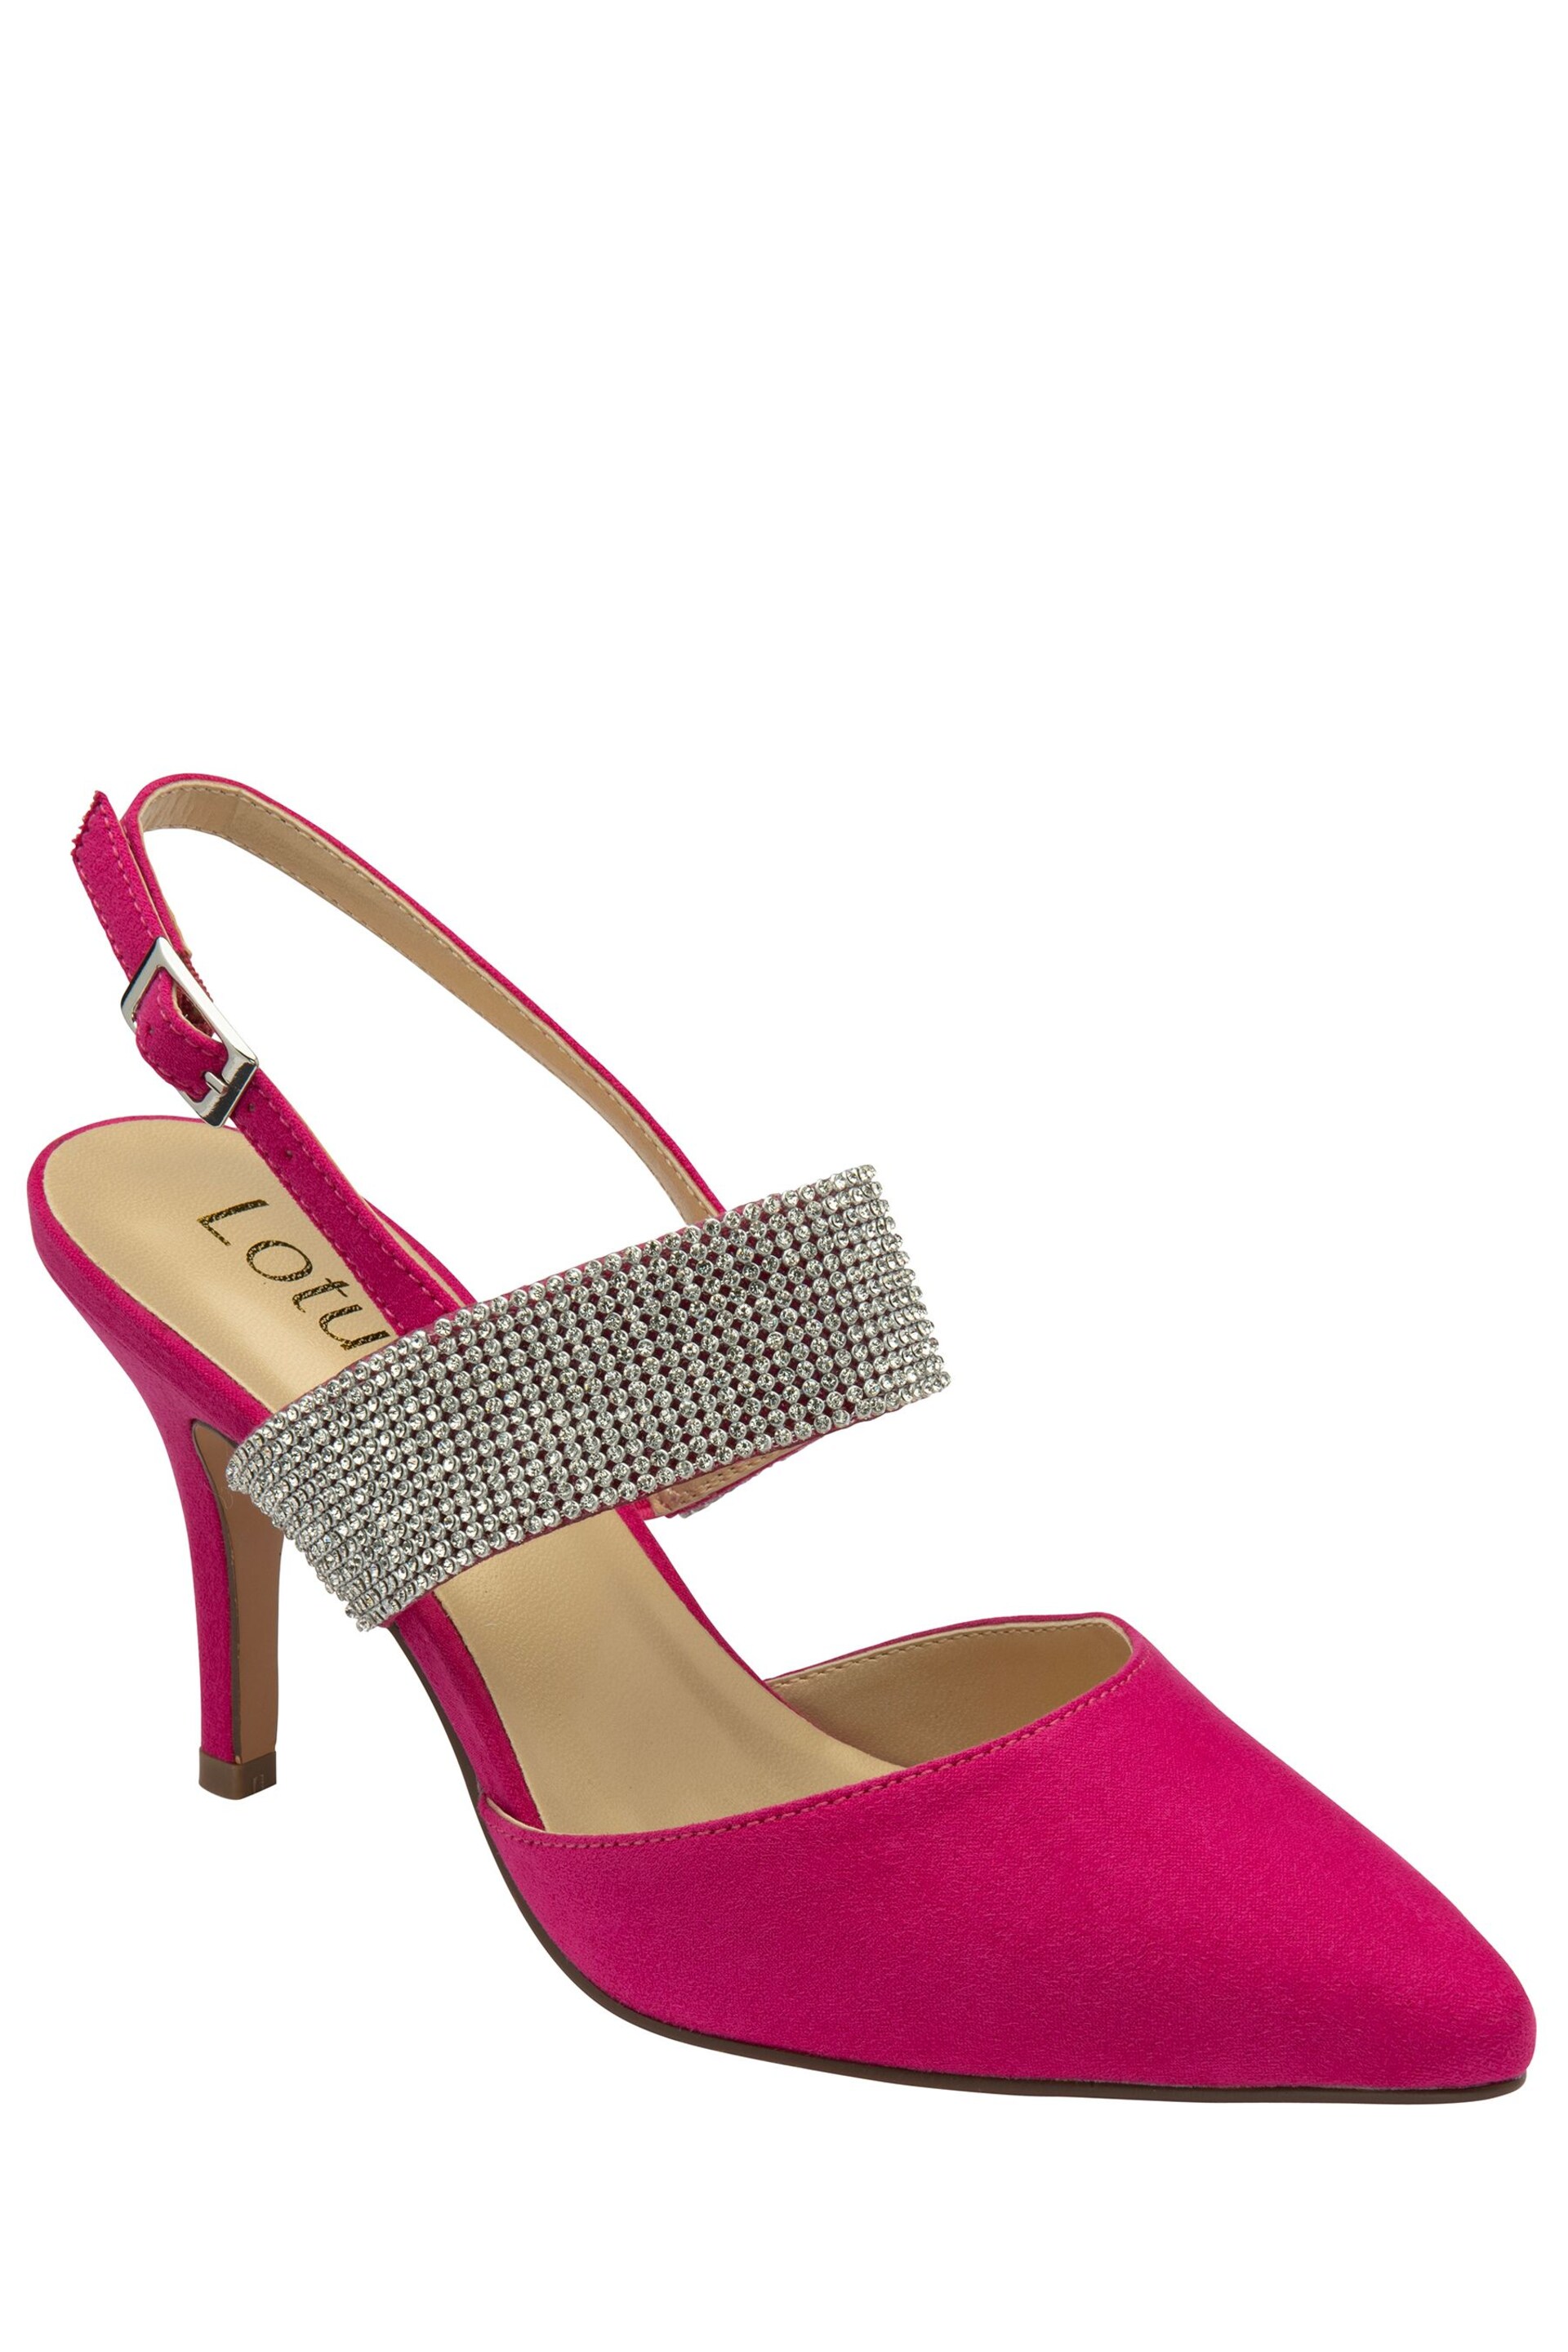 Lotus Pink/Sliver Slingback Court Shoes - Image 1 of 4